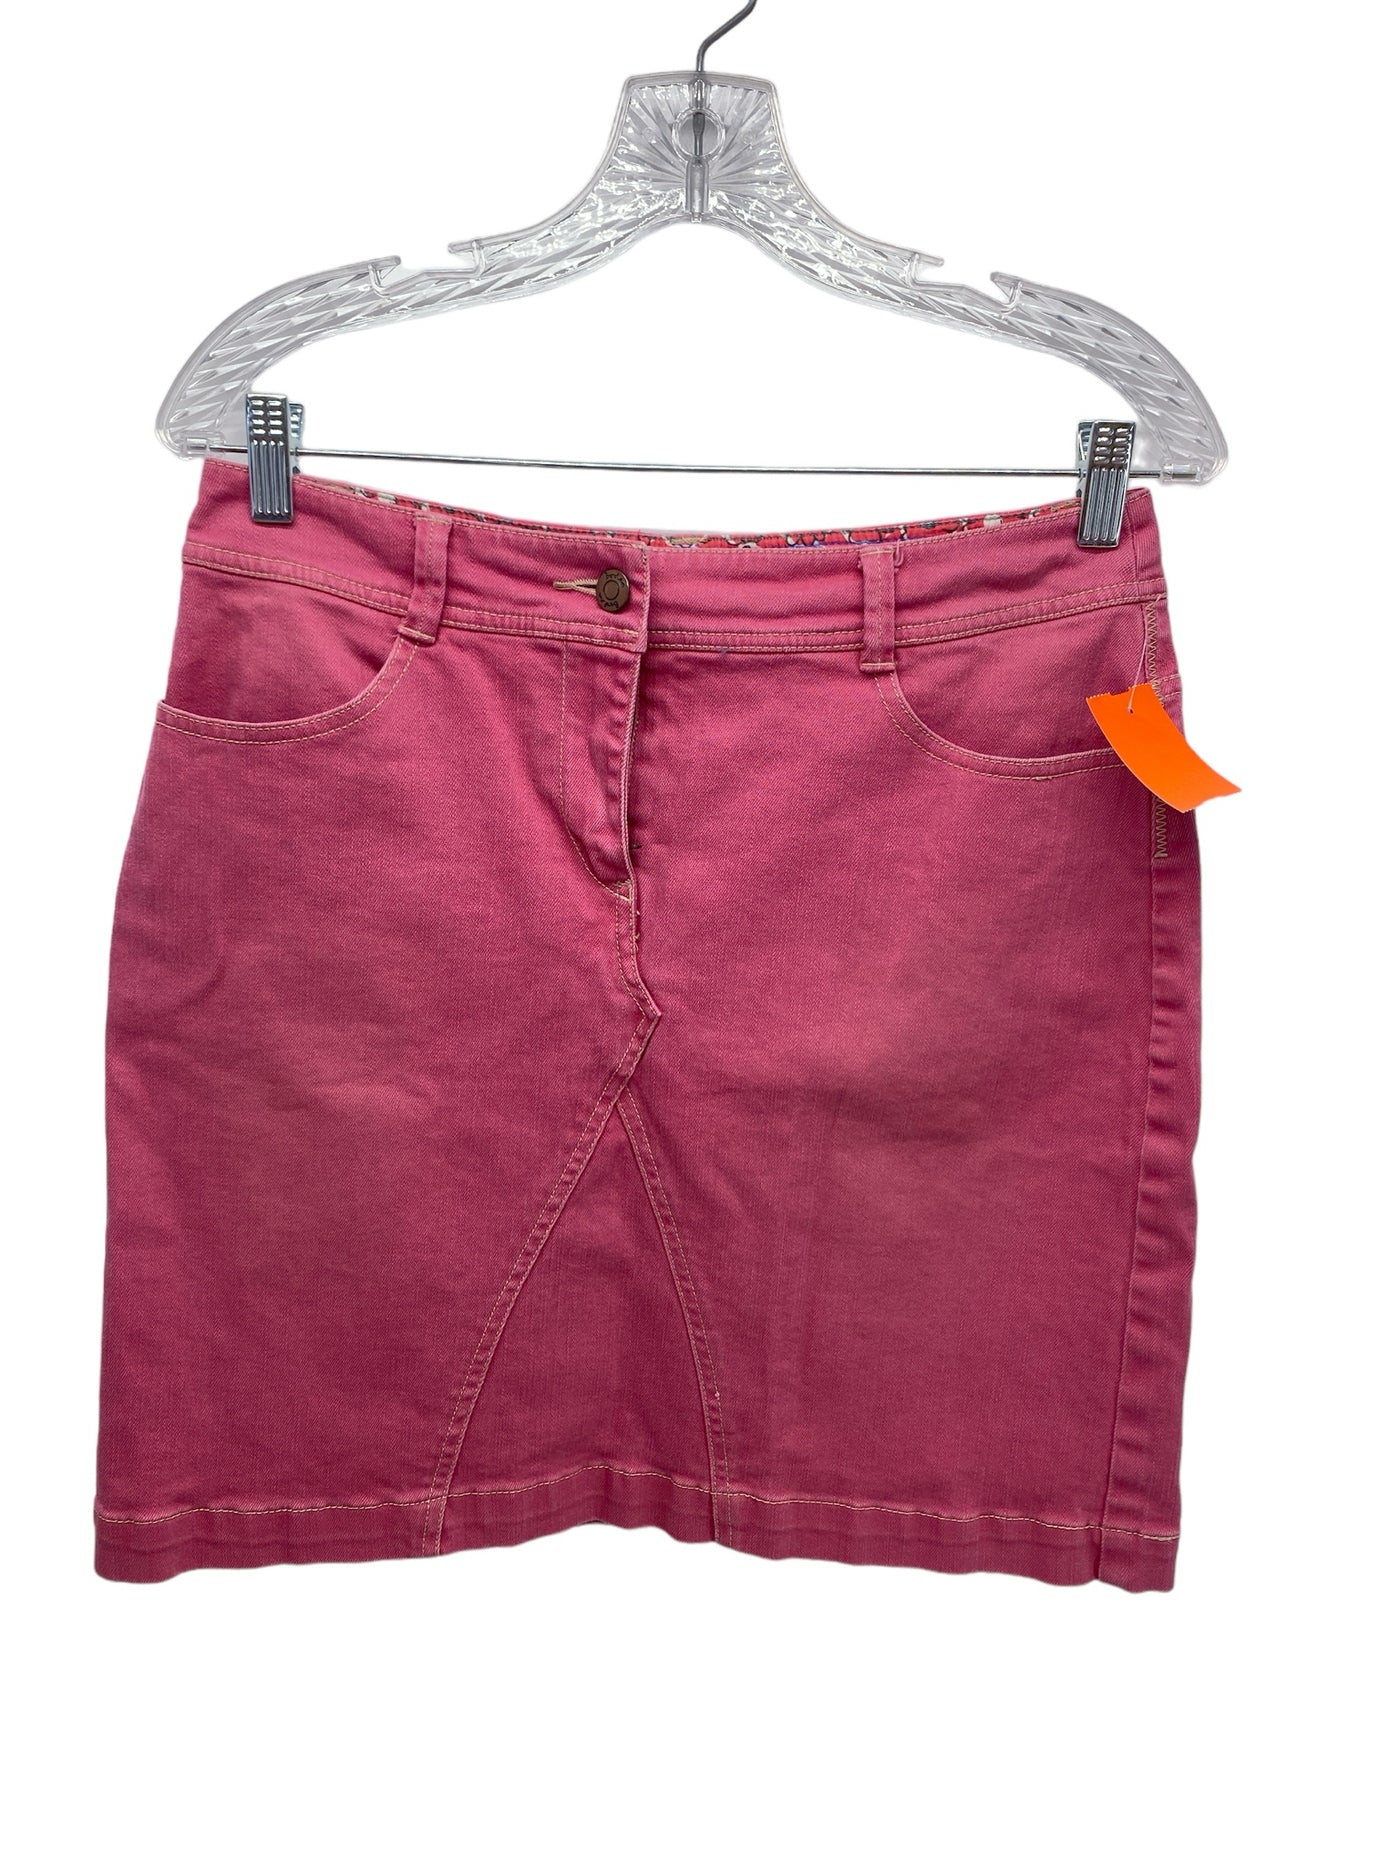 Boden Misses Size 8 Pink Skirt